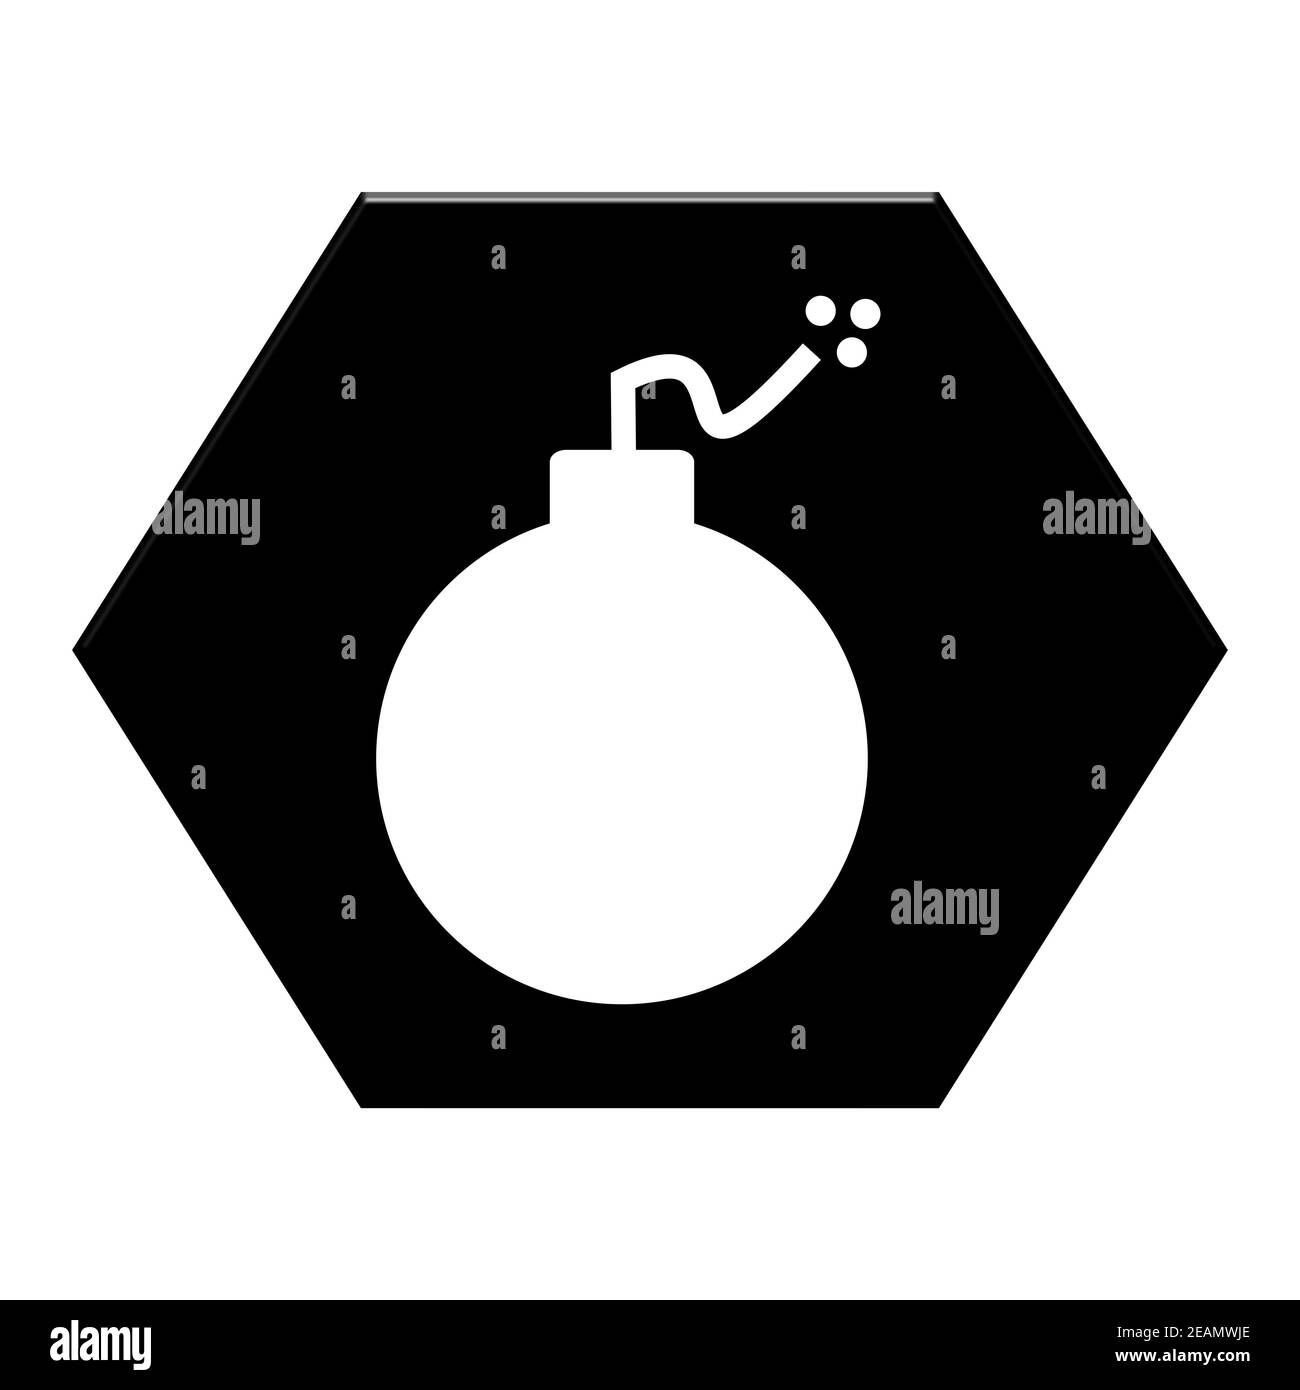 Black Hexagon Button showing Bomb, Danger or Terrorism Stock Photo